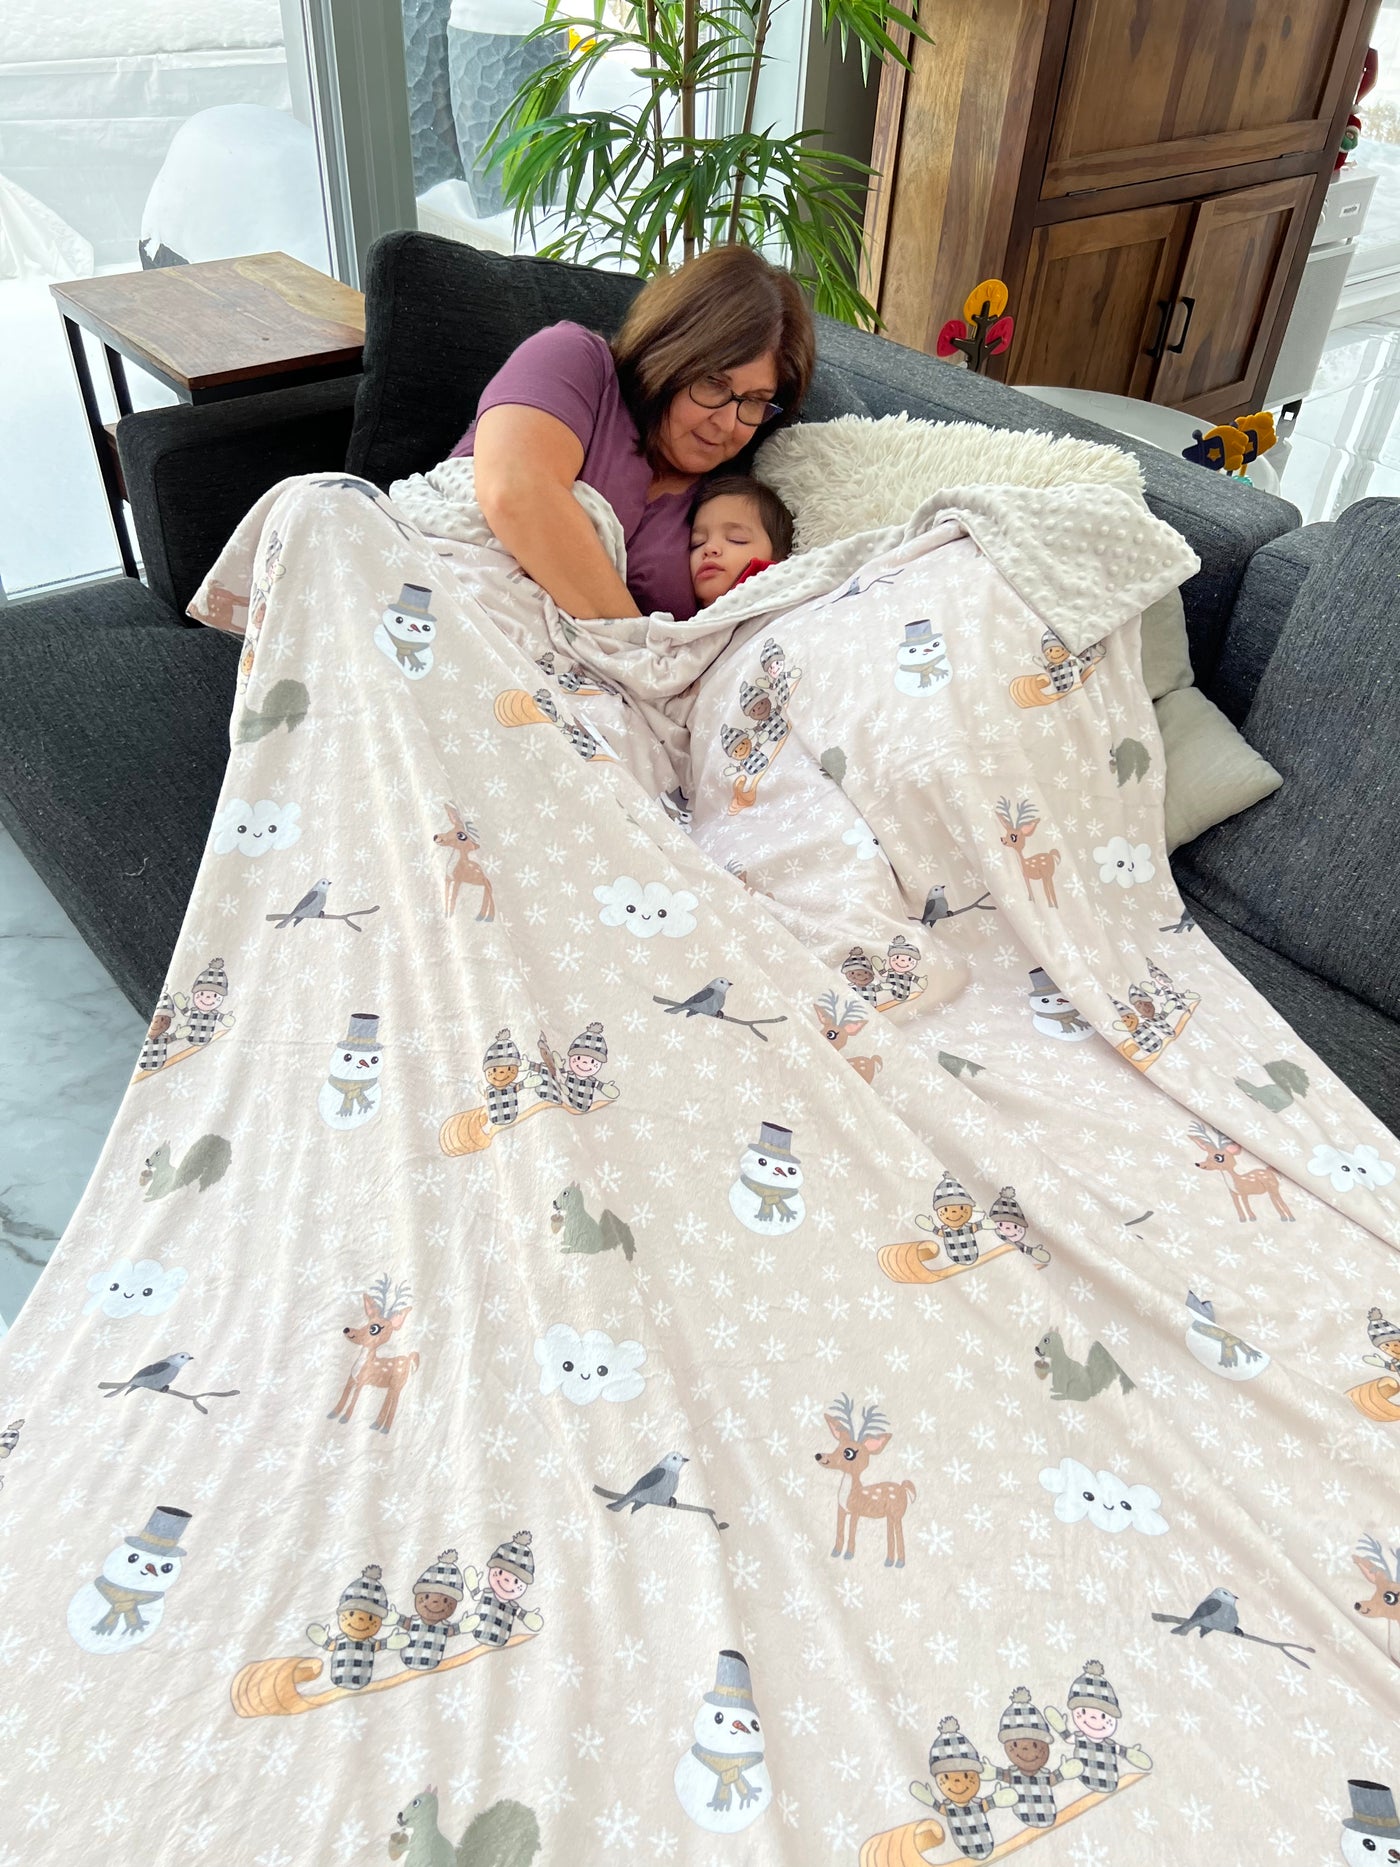 Giant blanket: Tipou Bébé Slidding